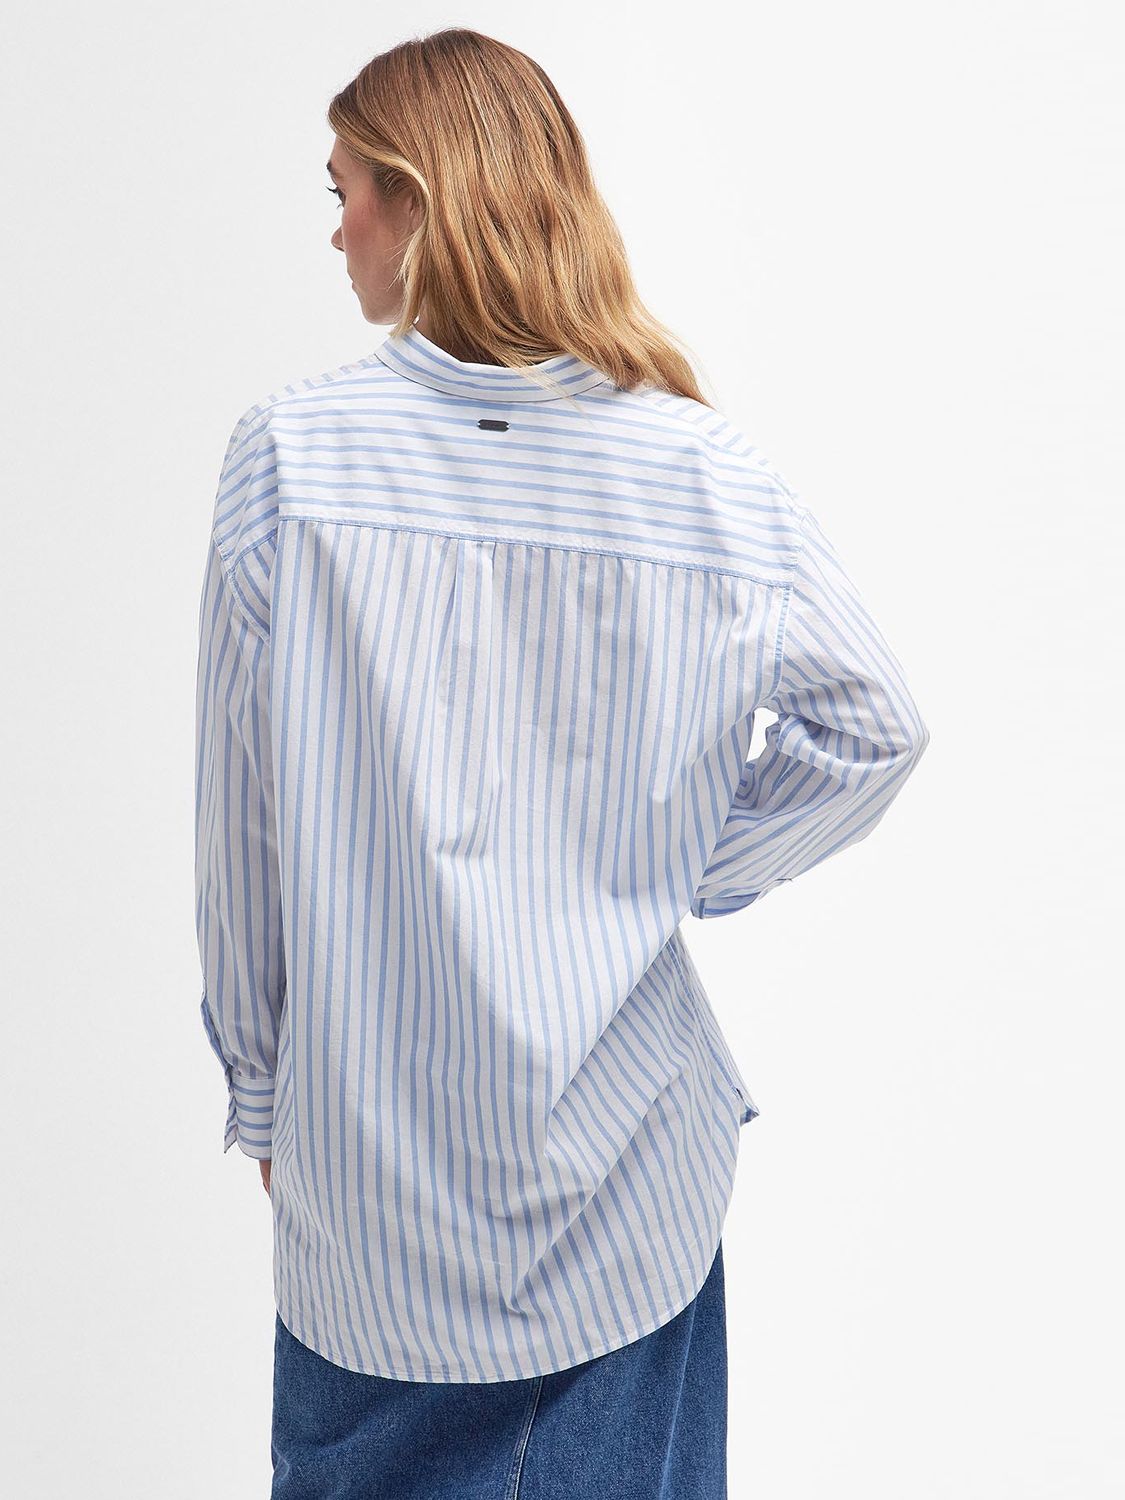 Barbour Nicola Stripe Shirt, White/Blue, 8